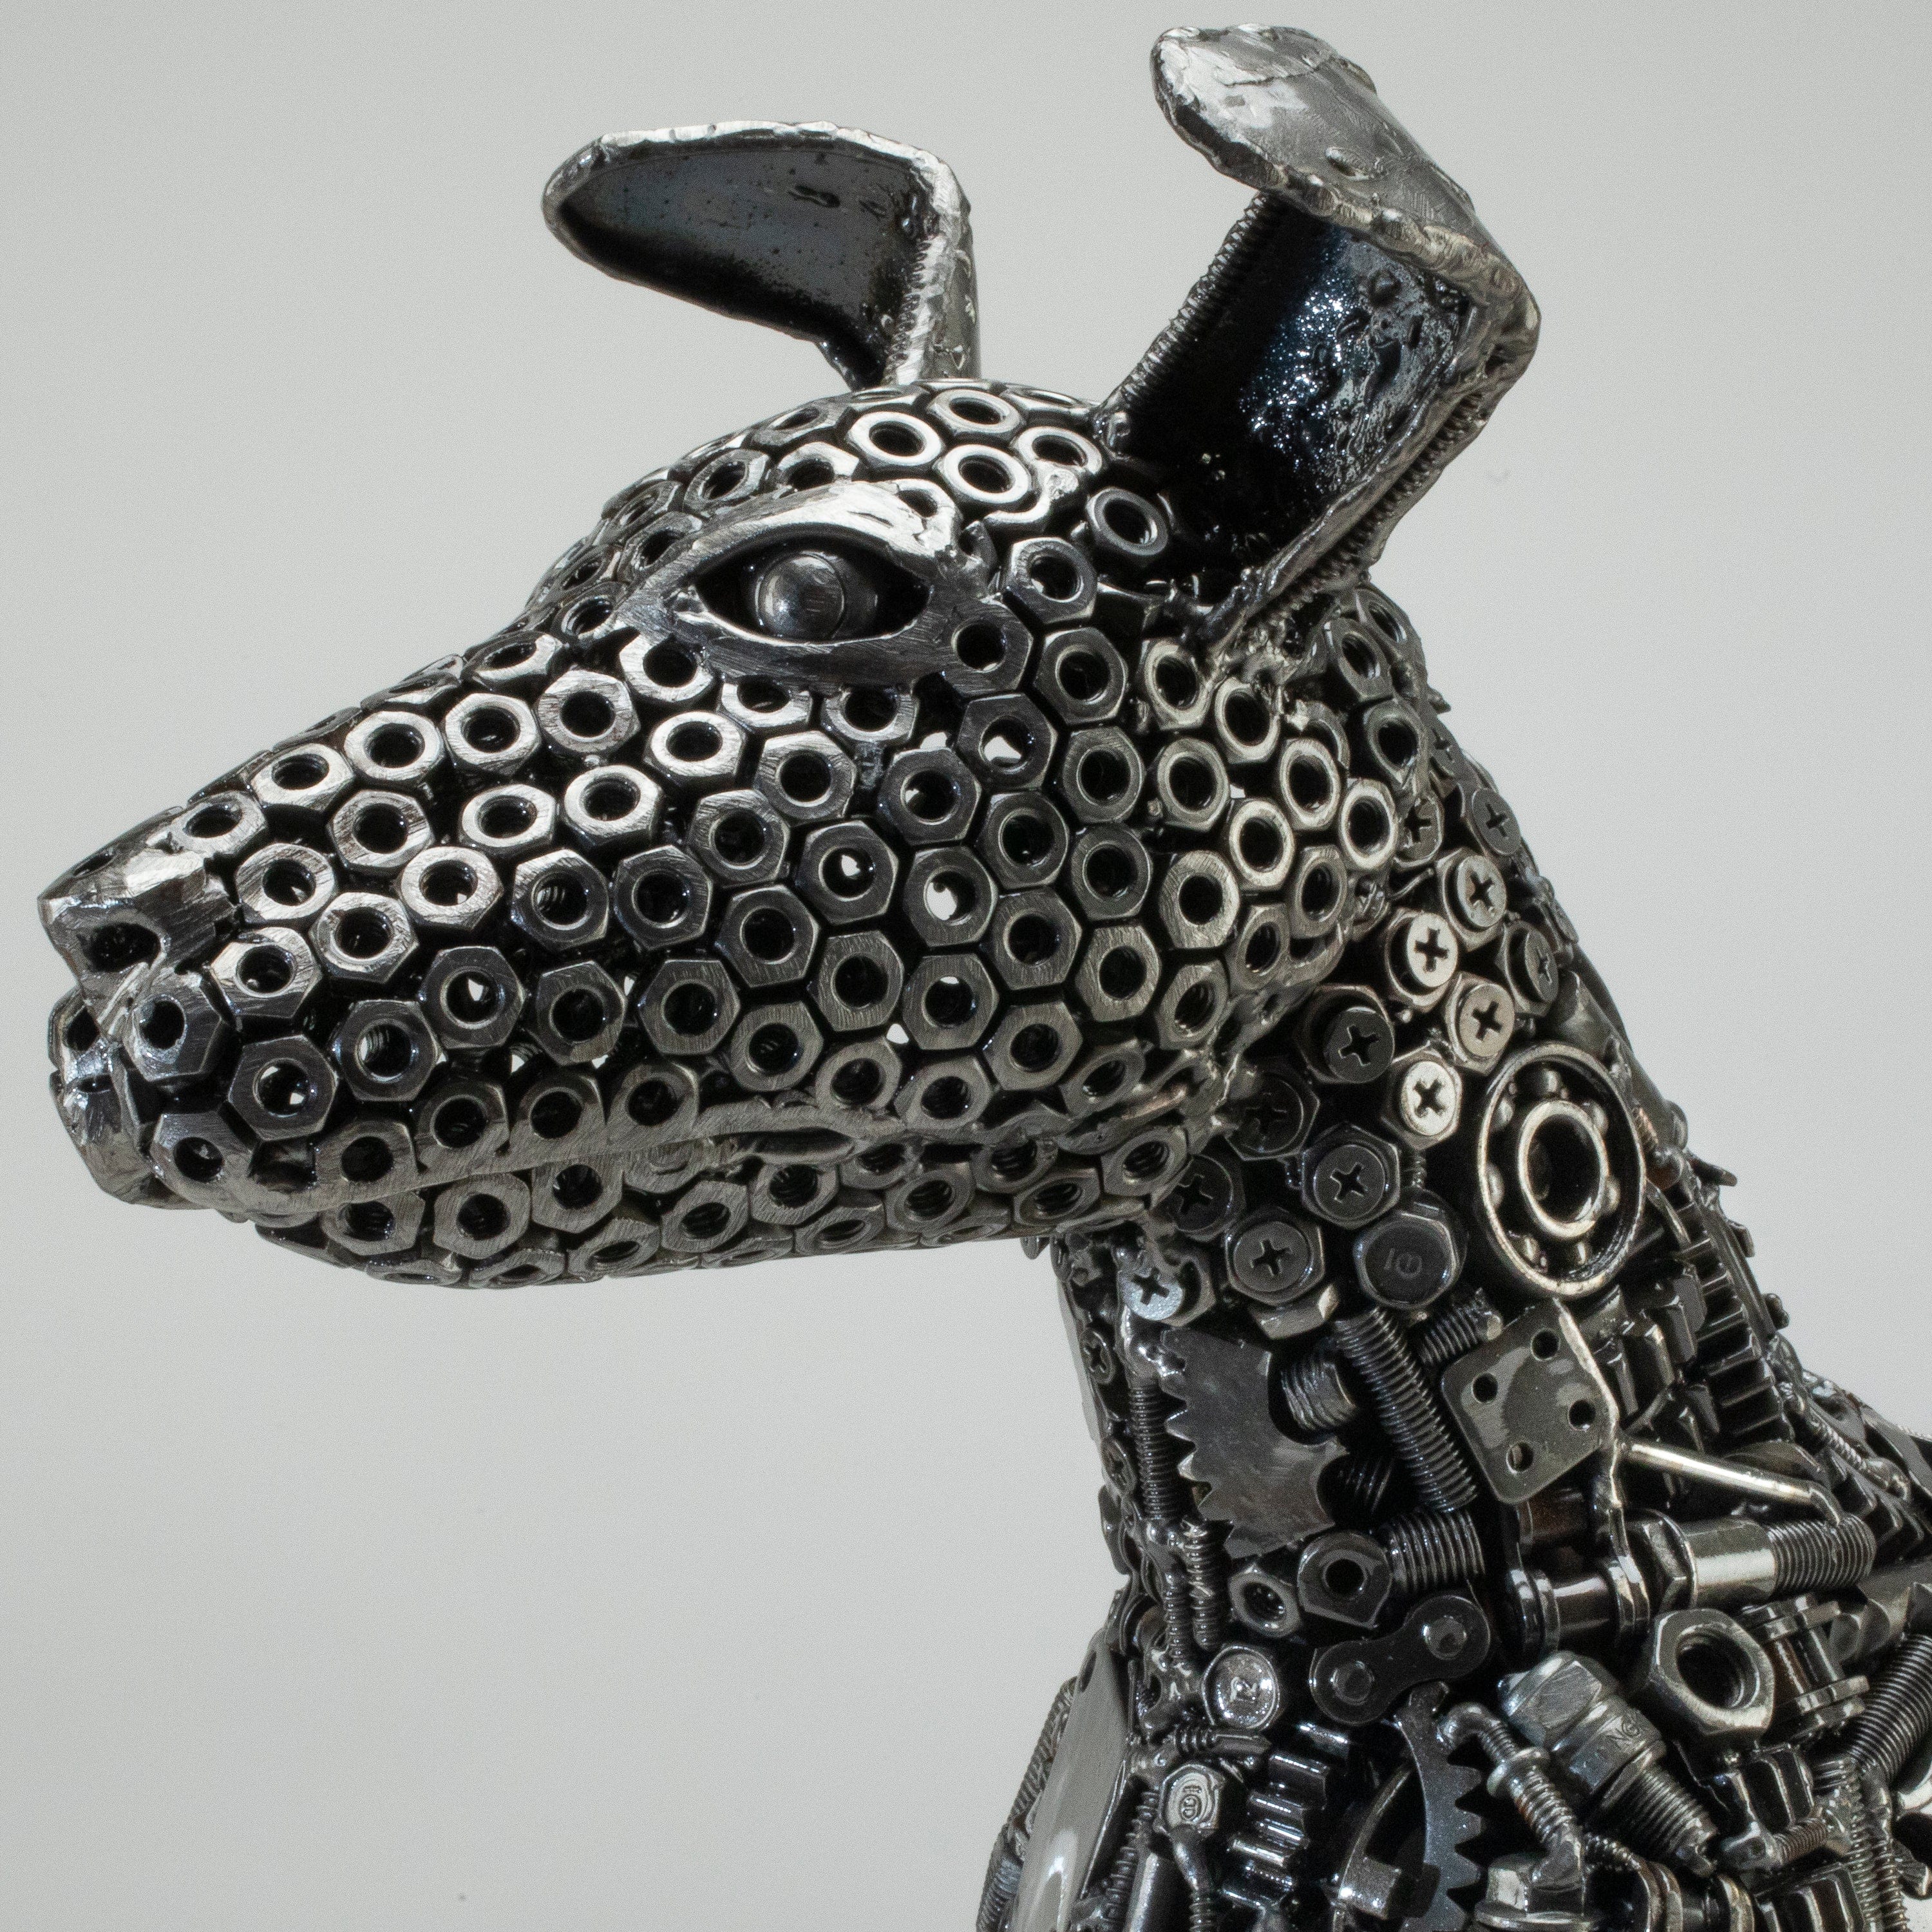 KALIFANO Recycled Metal Art 20" Bull Terrier Dog Recycled Metal Art Sculpture RMS-BT50x48-PK